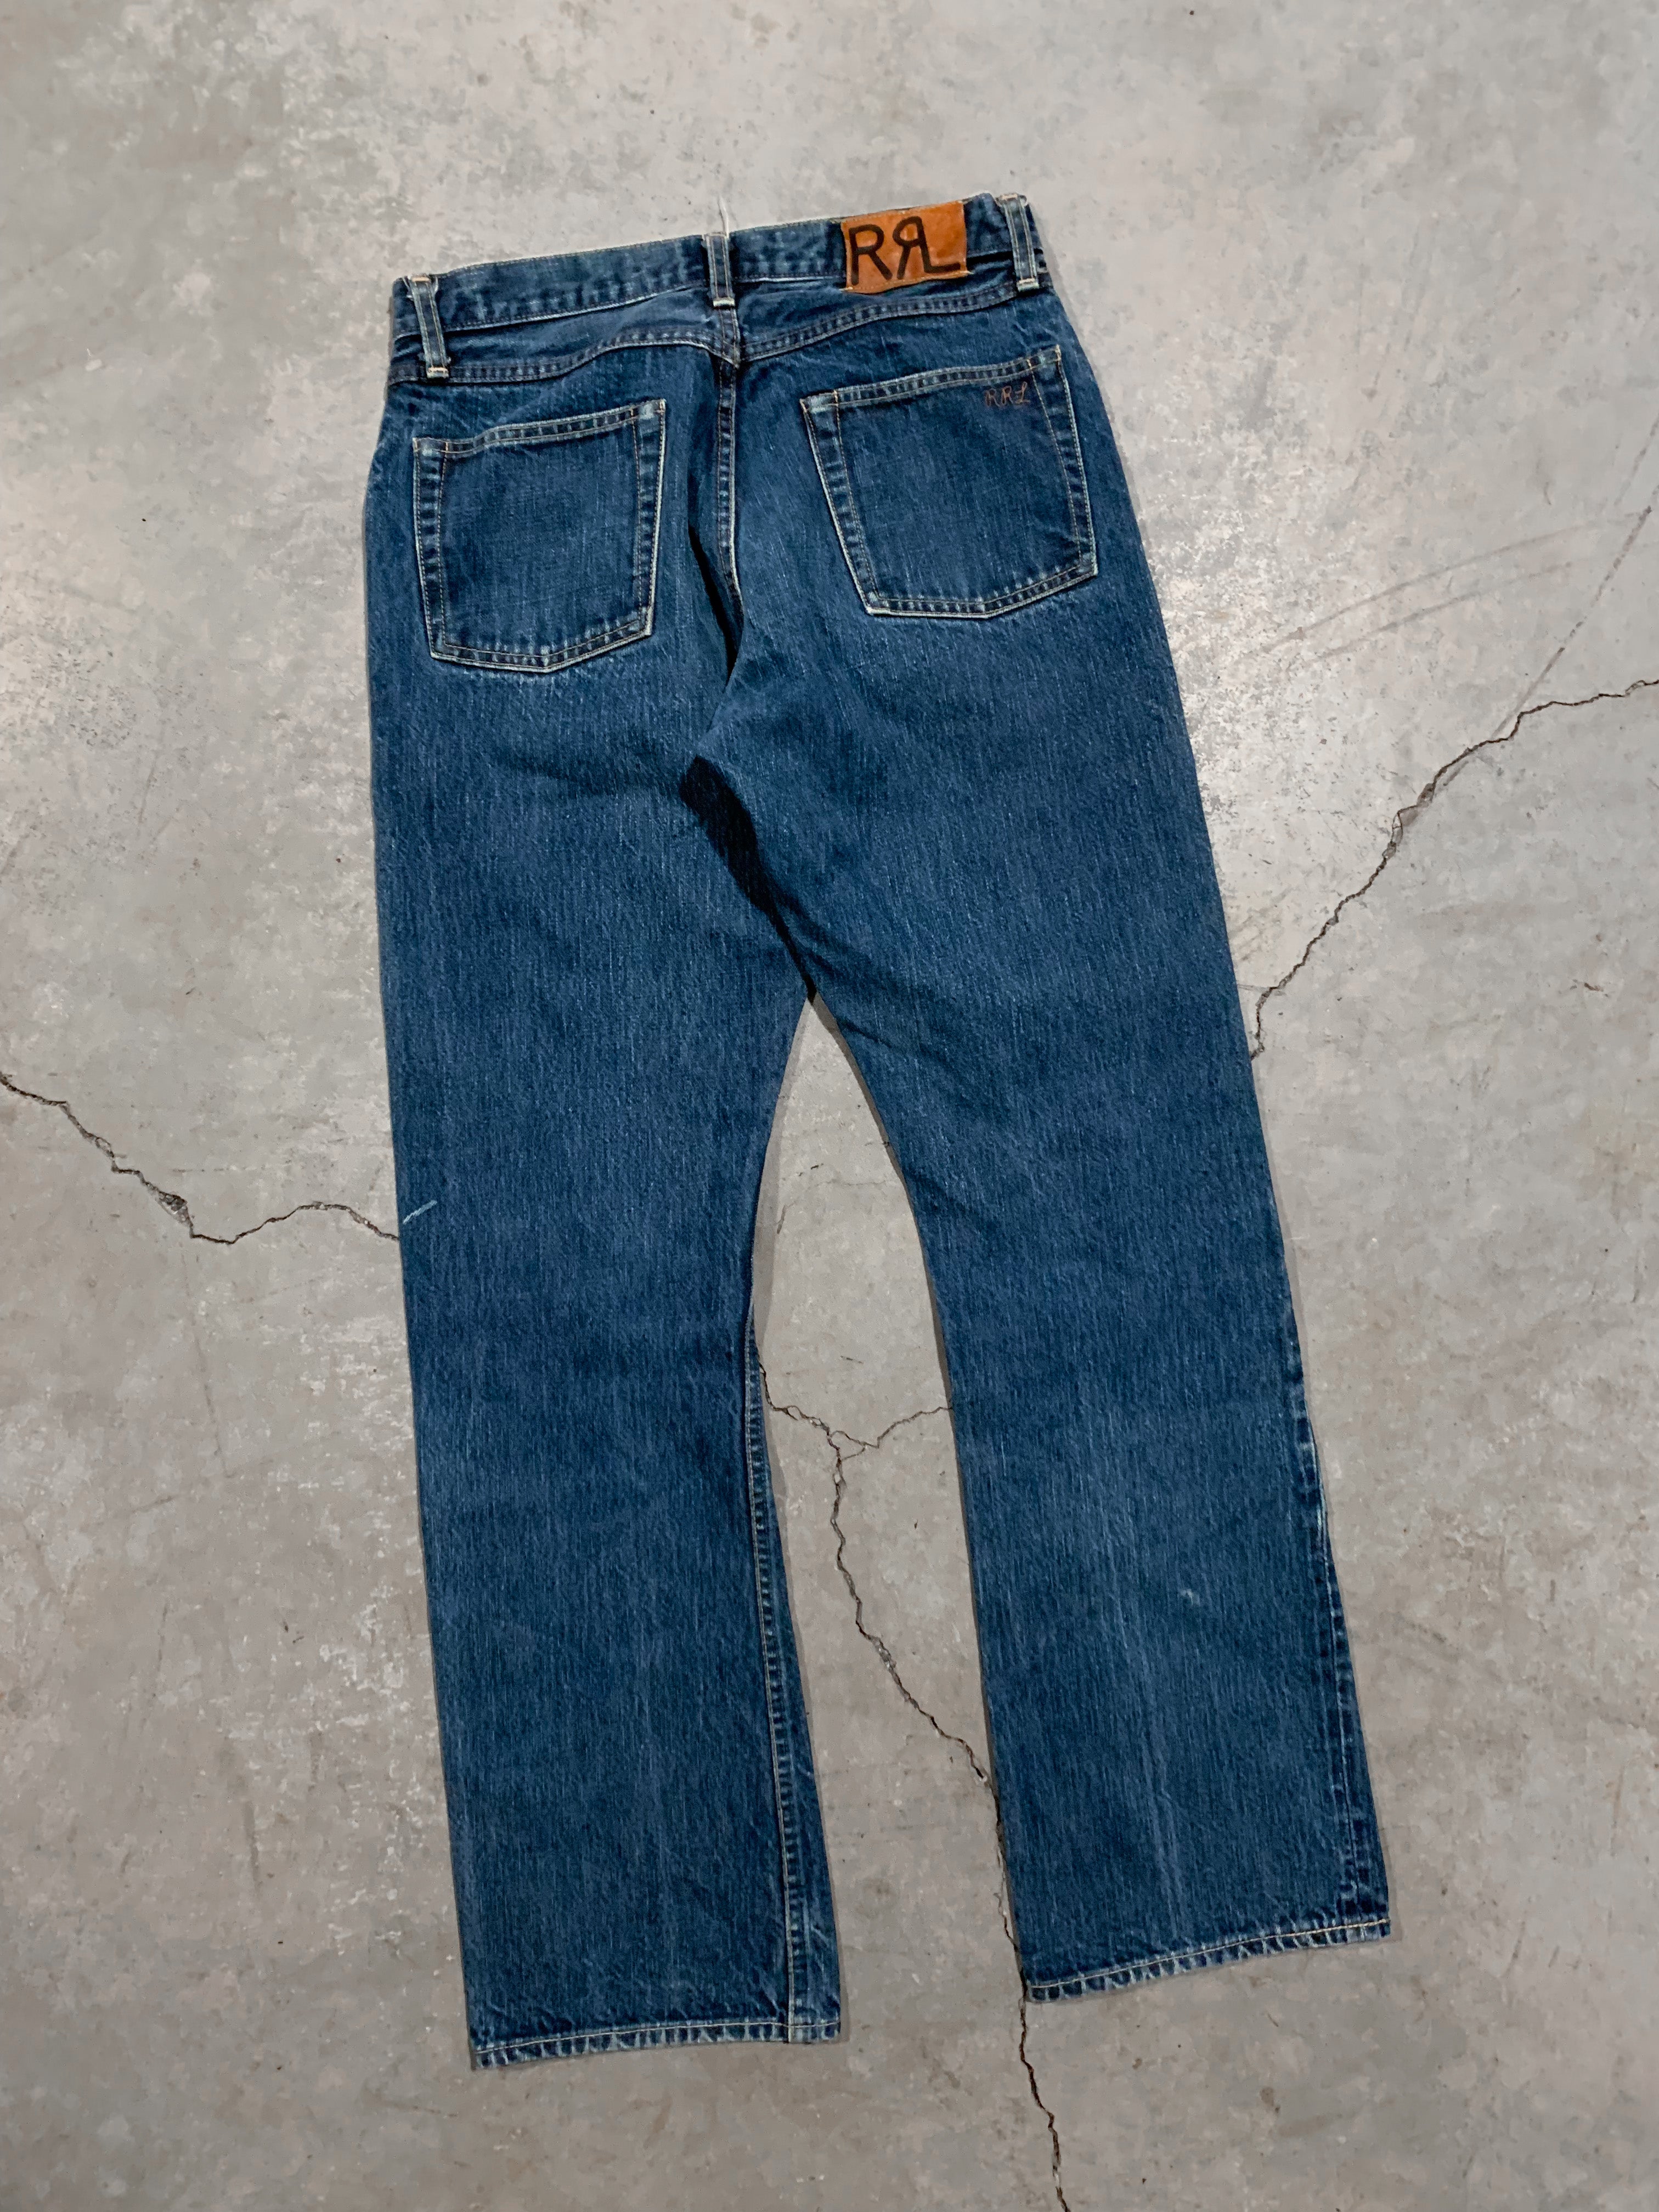 1990s RRL Flared Sanforized Jeans [30 x 31]